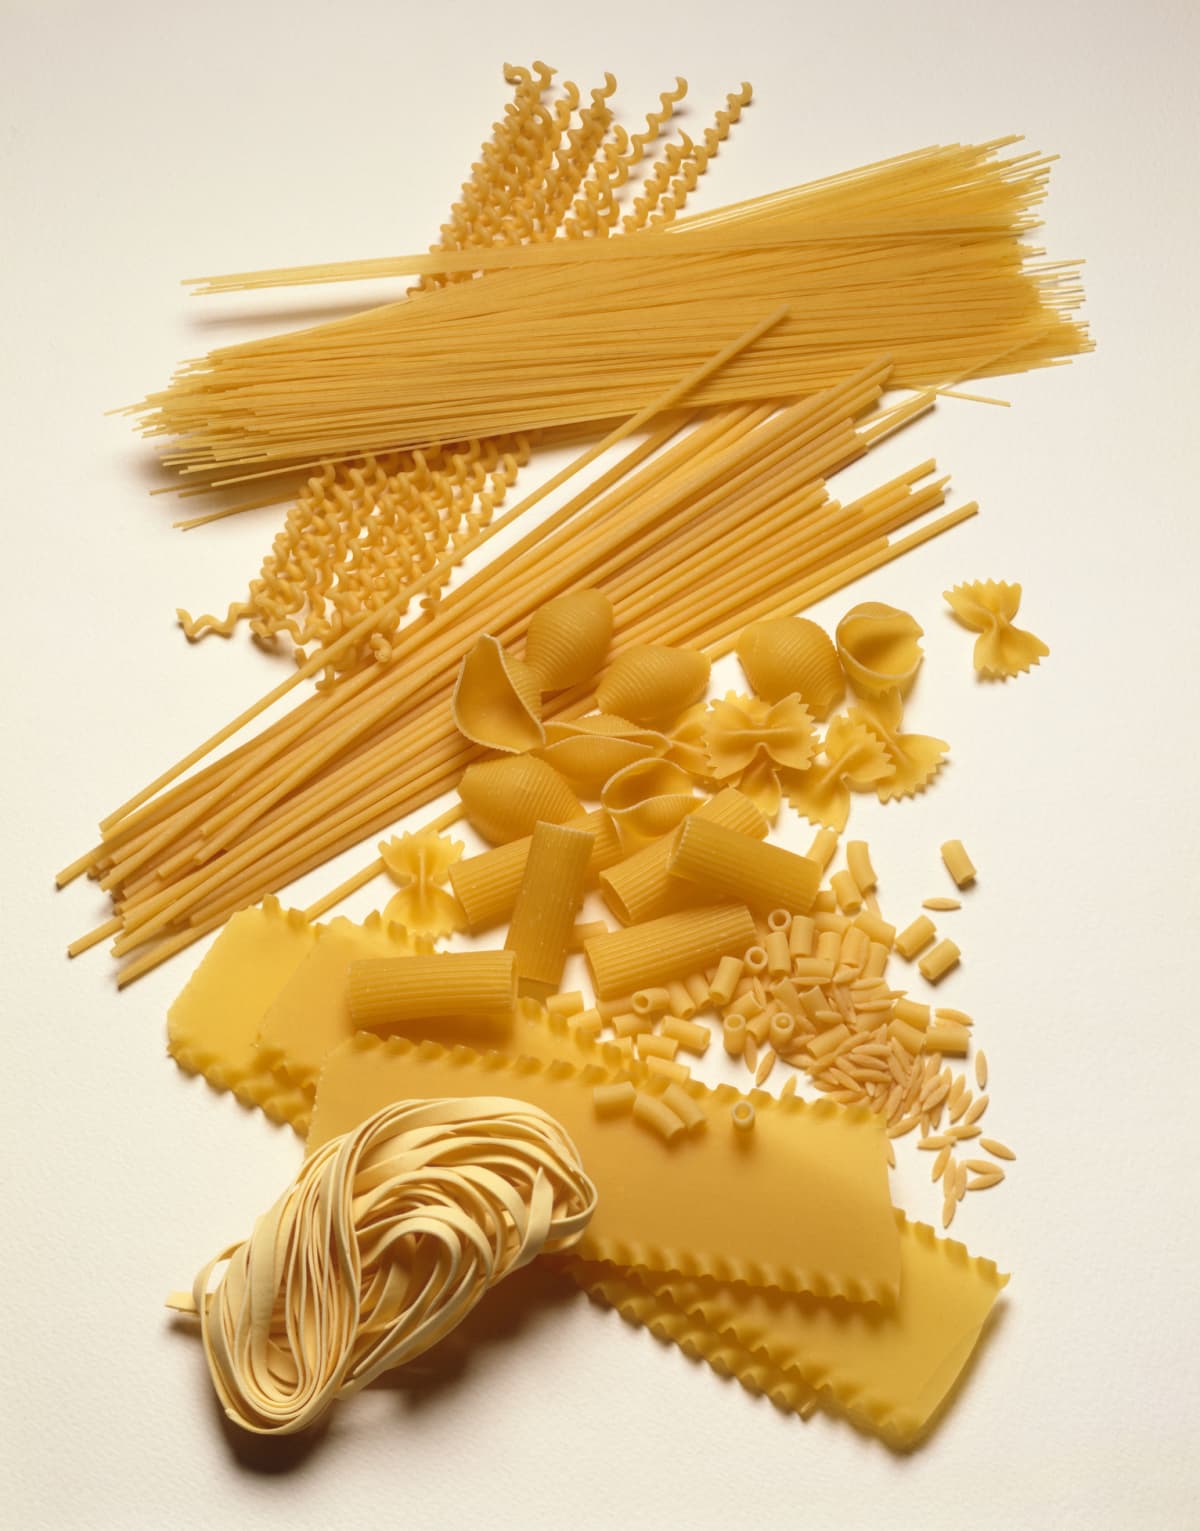 Assorted dry pastas